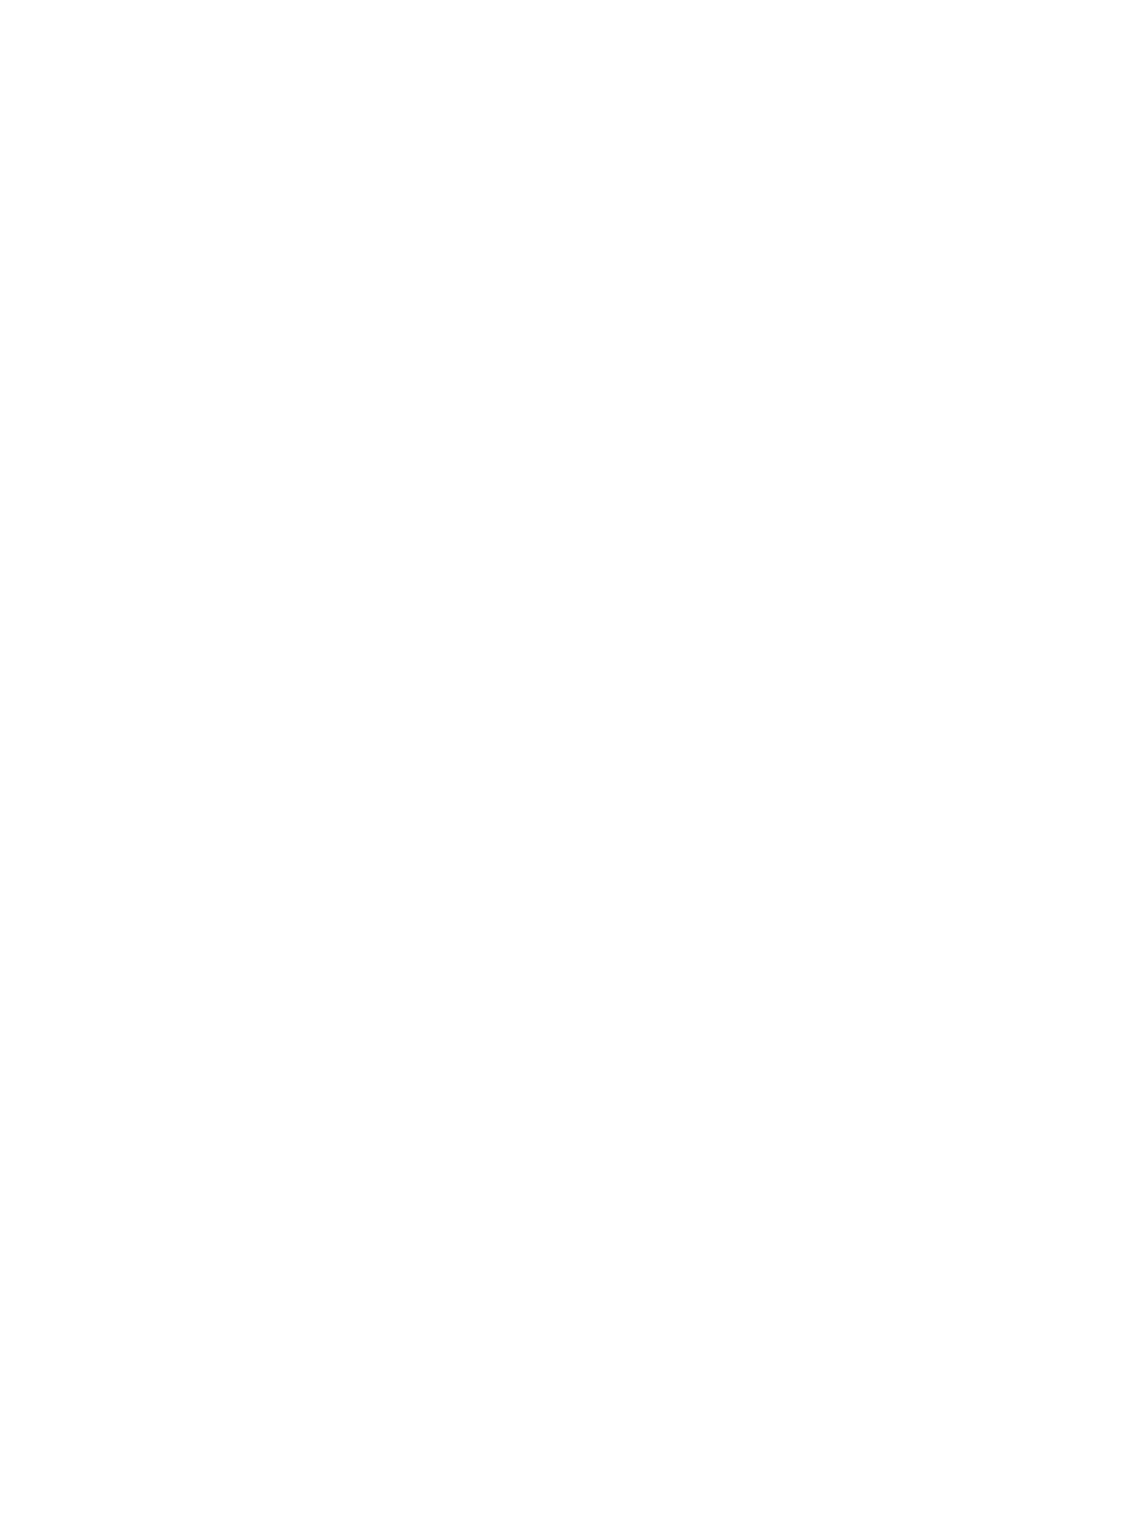 SMN Power Company logo for dark backgrounds (transparent PNG)